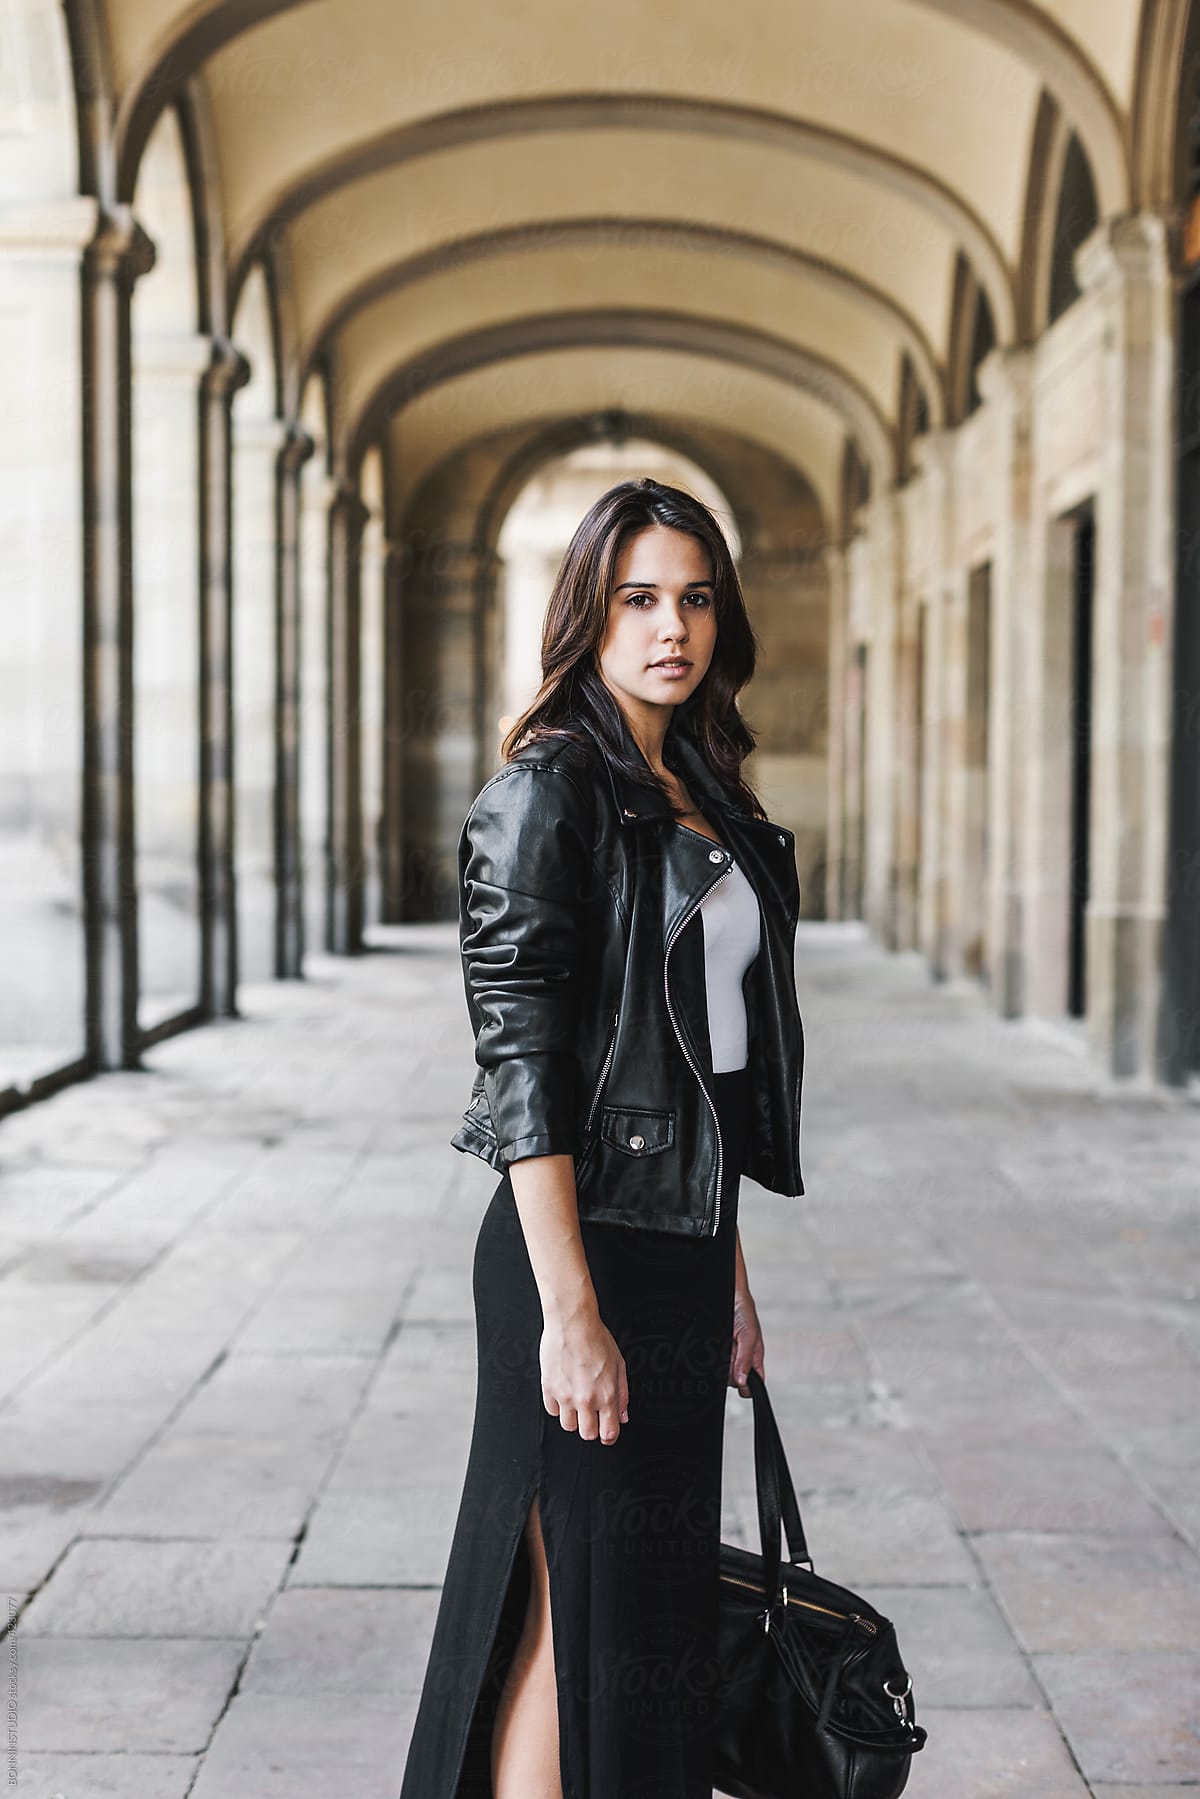 City life woman wearing leather jacket.